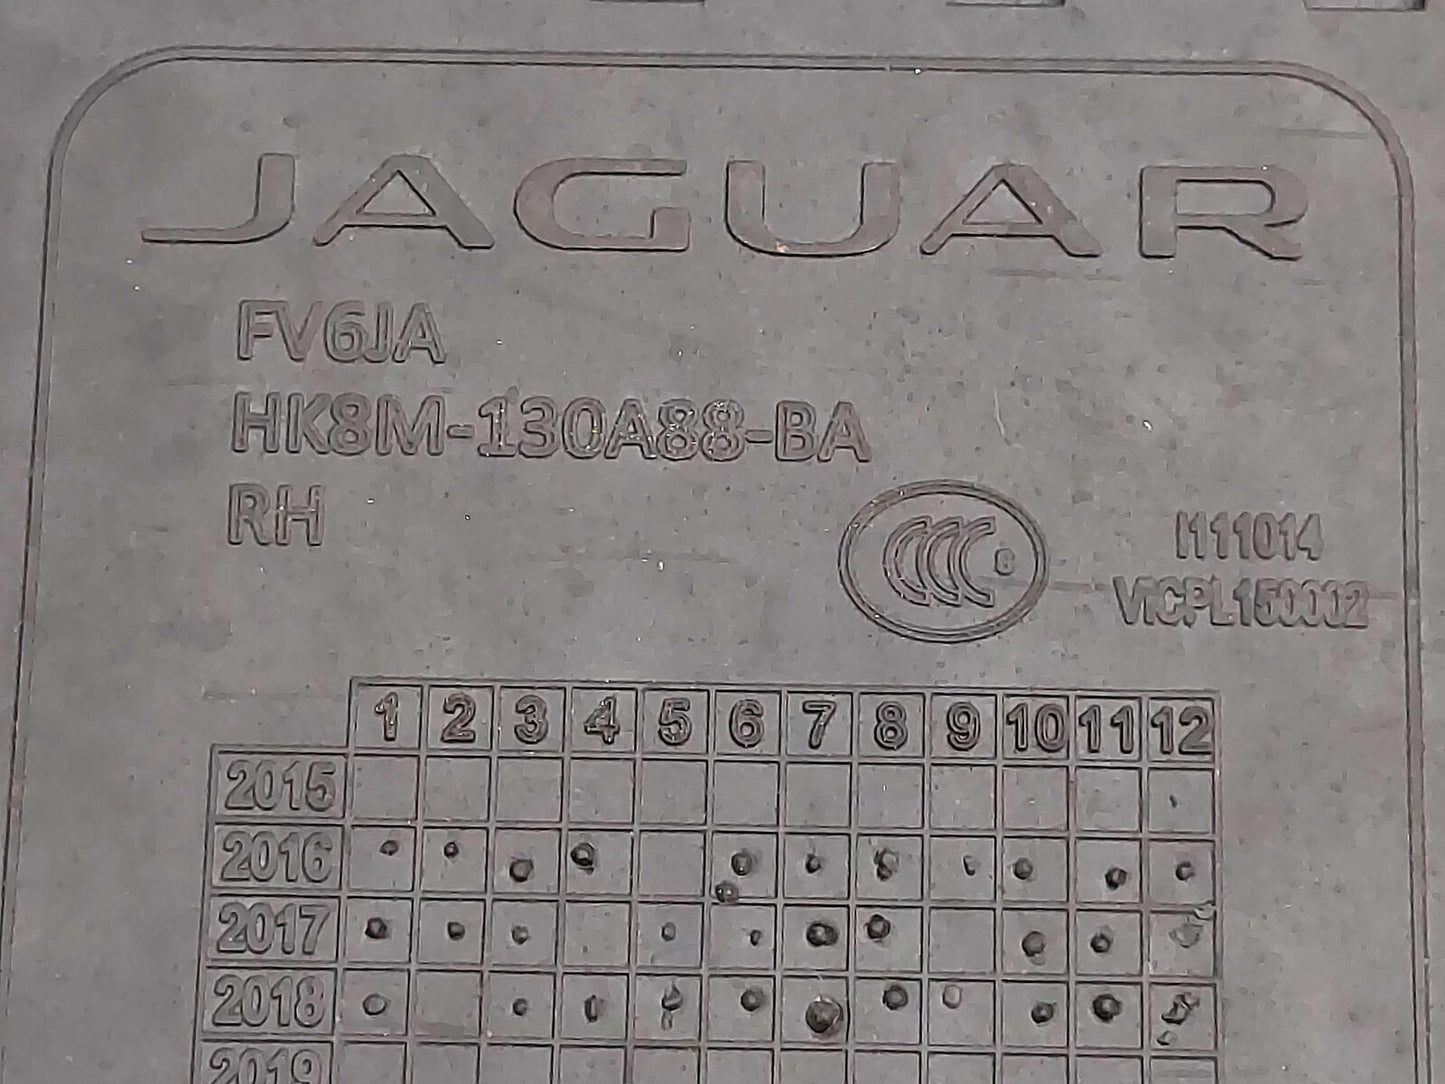 2019 Jaguar F-pace Floor Mats Mat Set HK8M-130A88-AA HK8M-130A88-BA